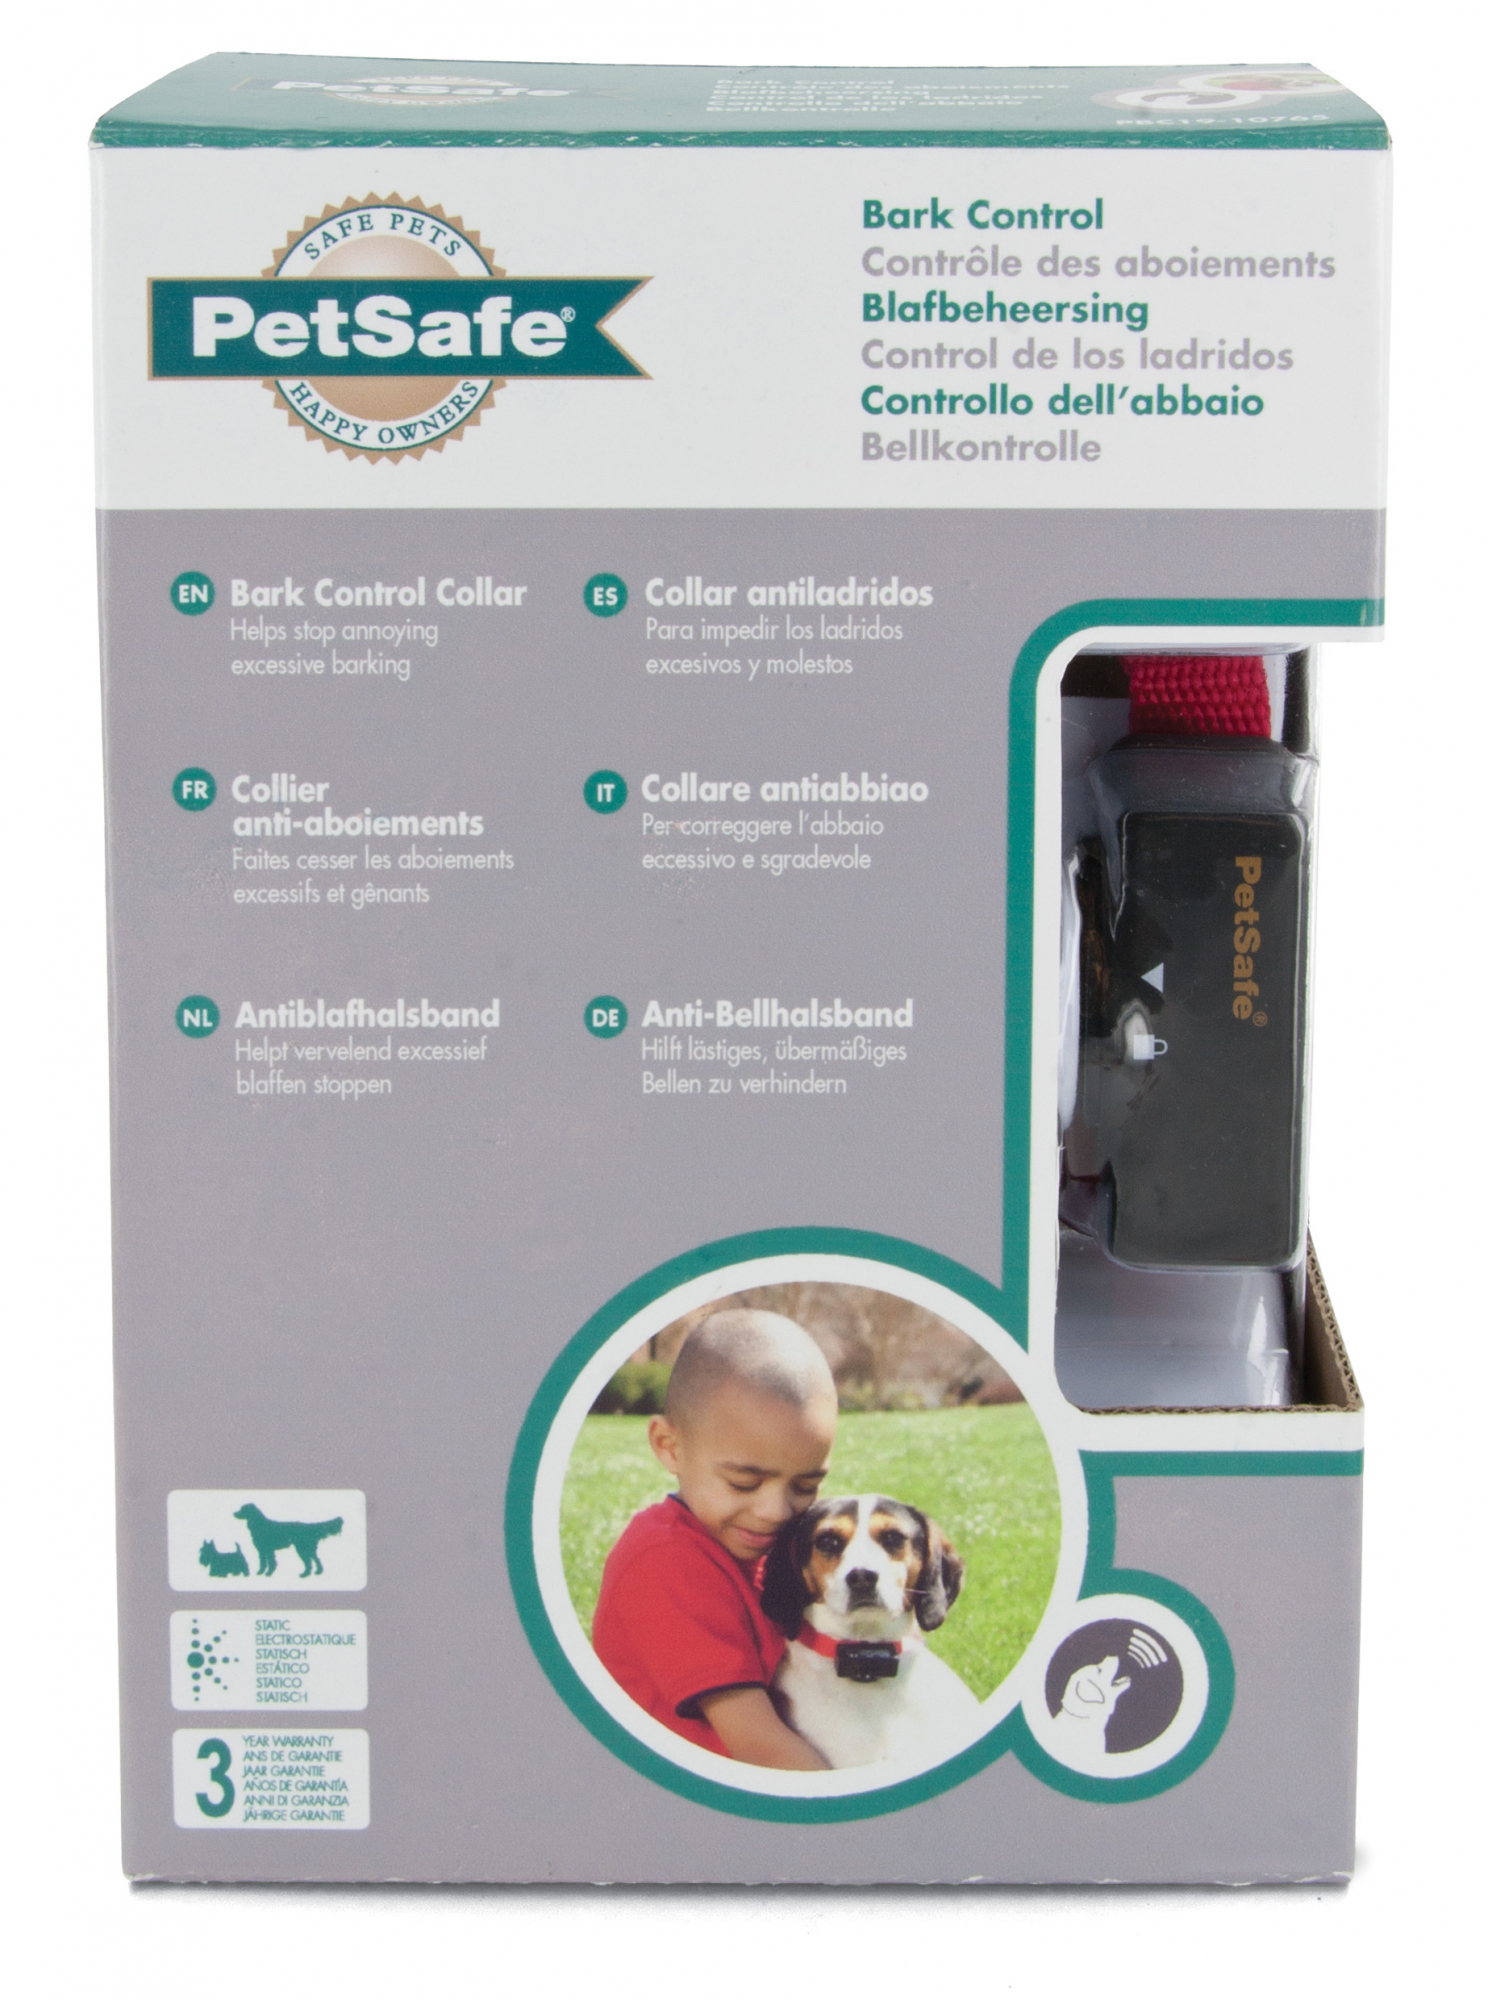 Collare anti-abbaio standard PetSafe